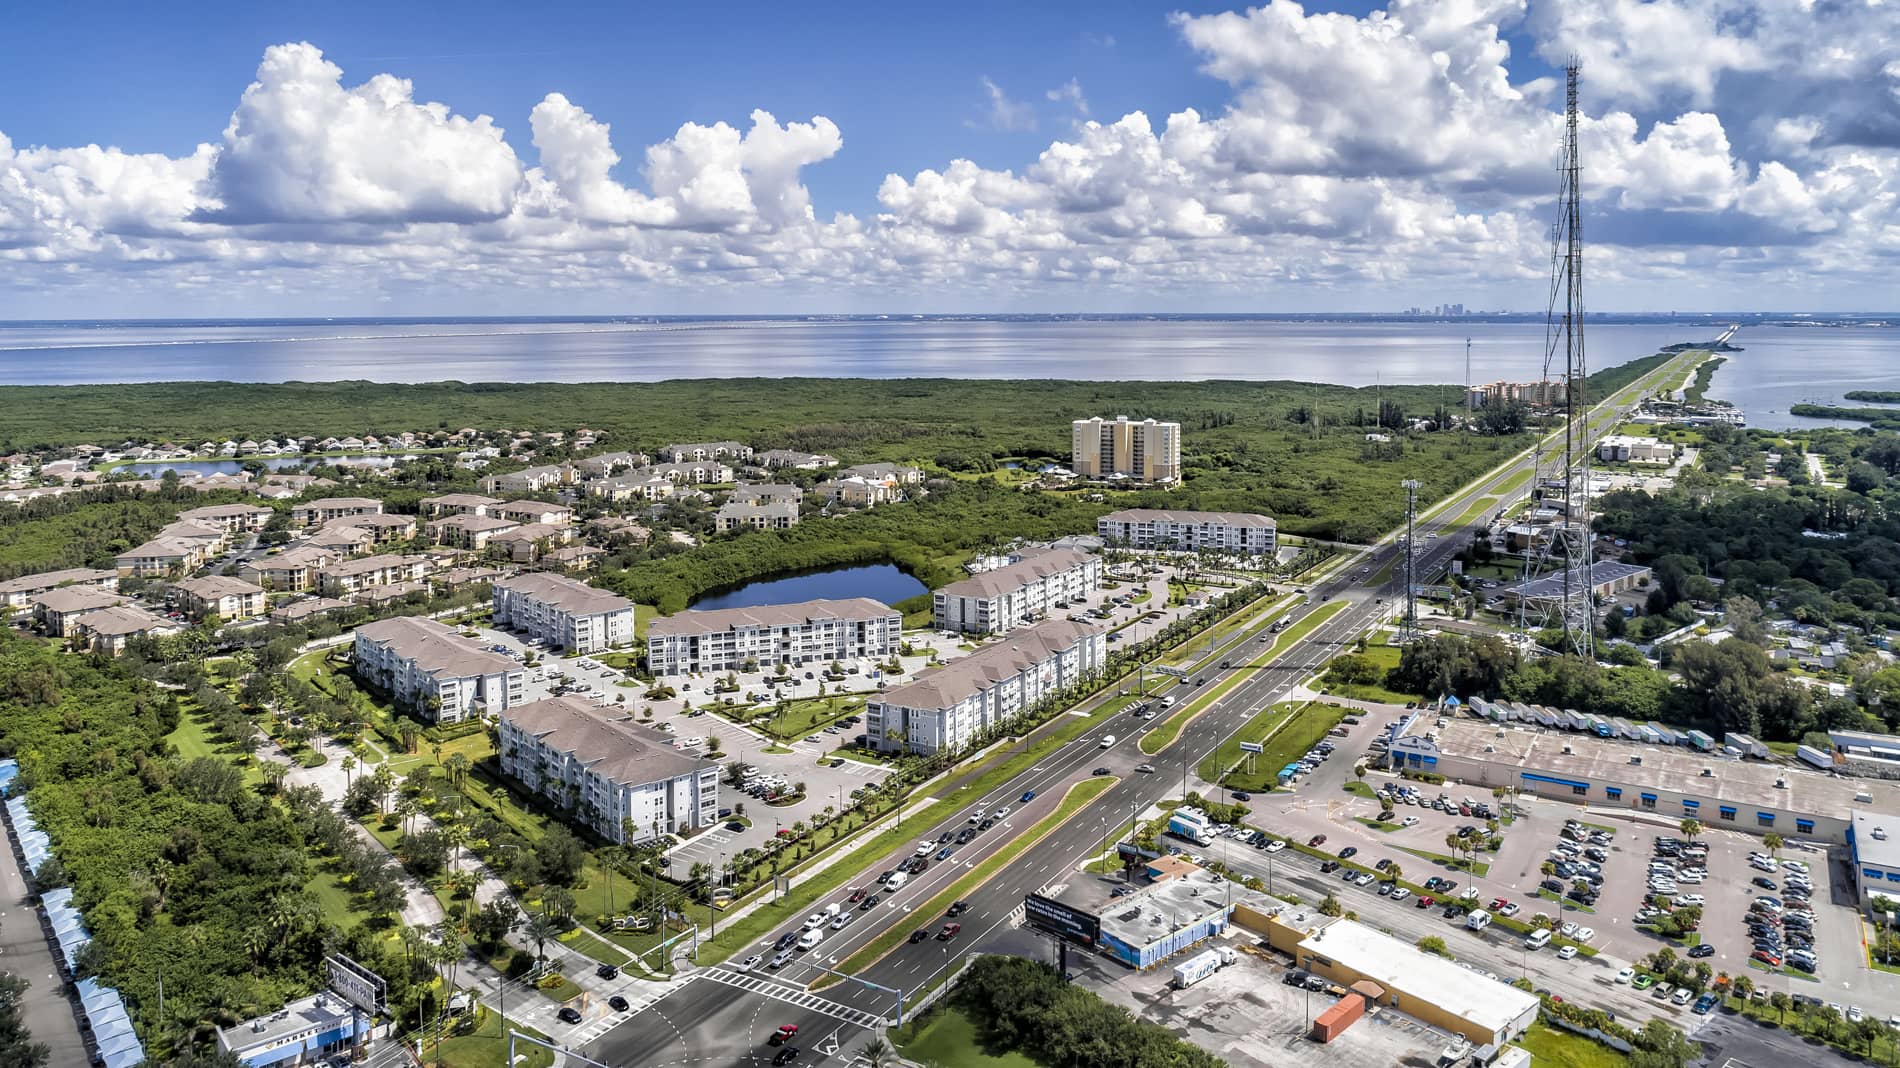 Peridot Palms Apartments Aerial View